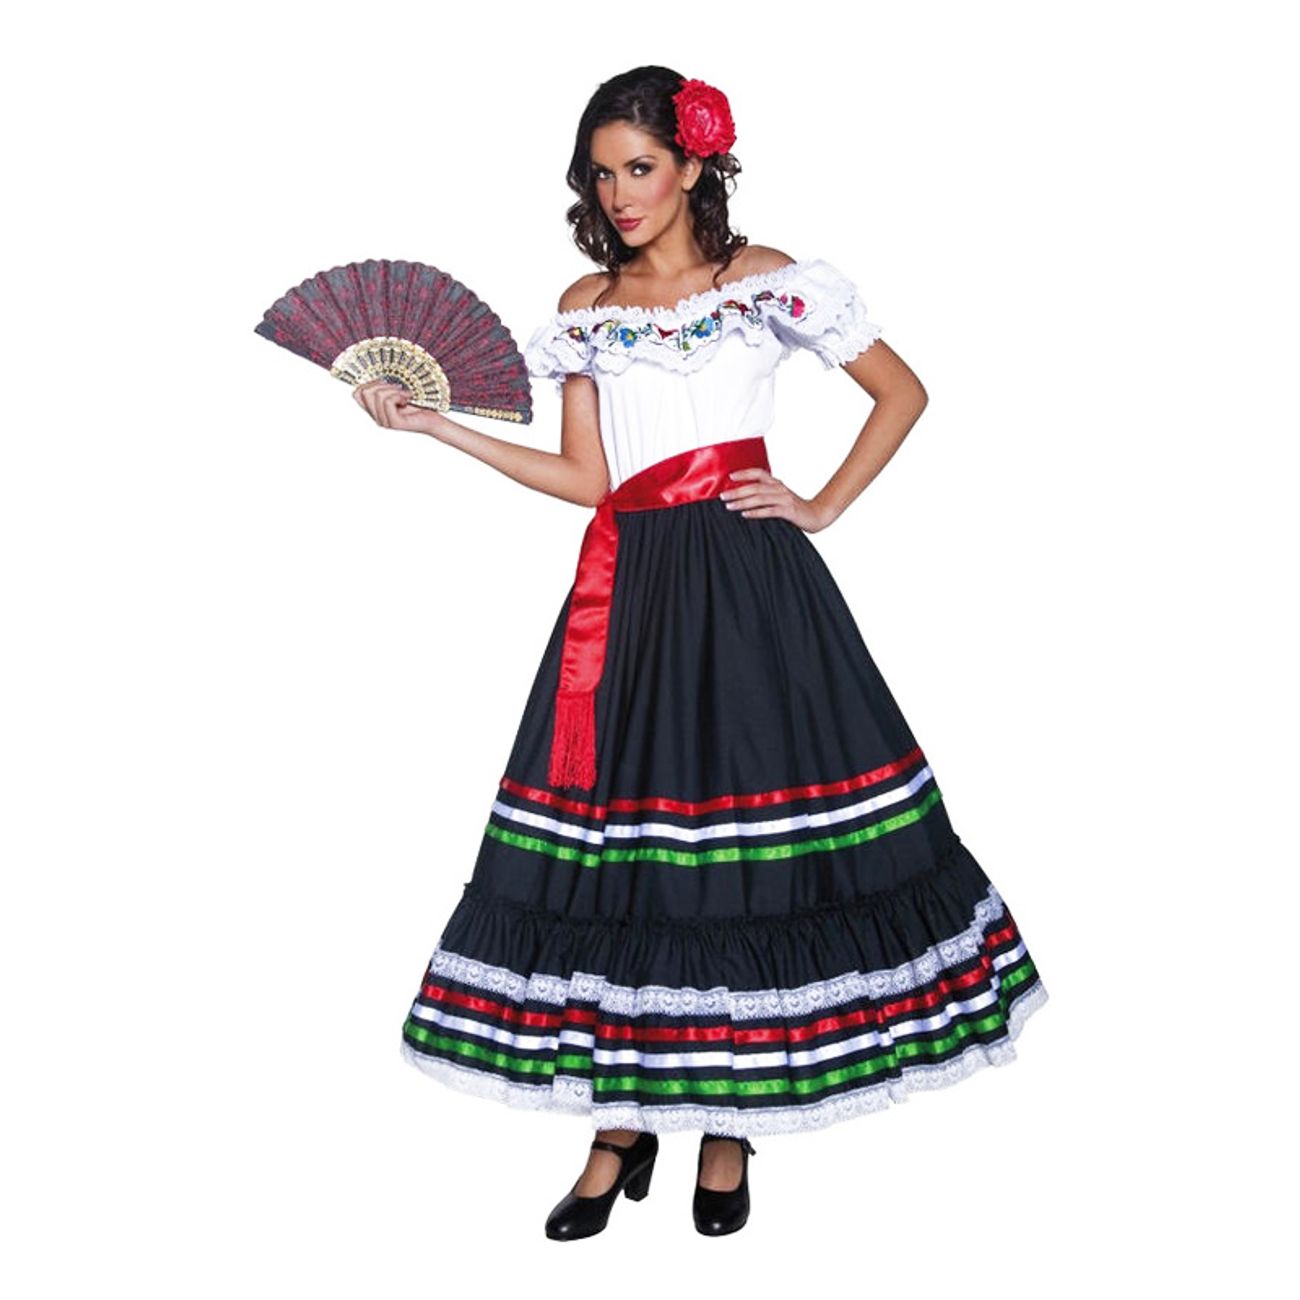 Interessant Junction Sømil Traditionel Mexicansk Pige Kostume | Partykungen